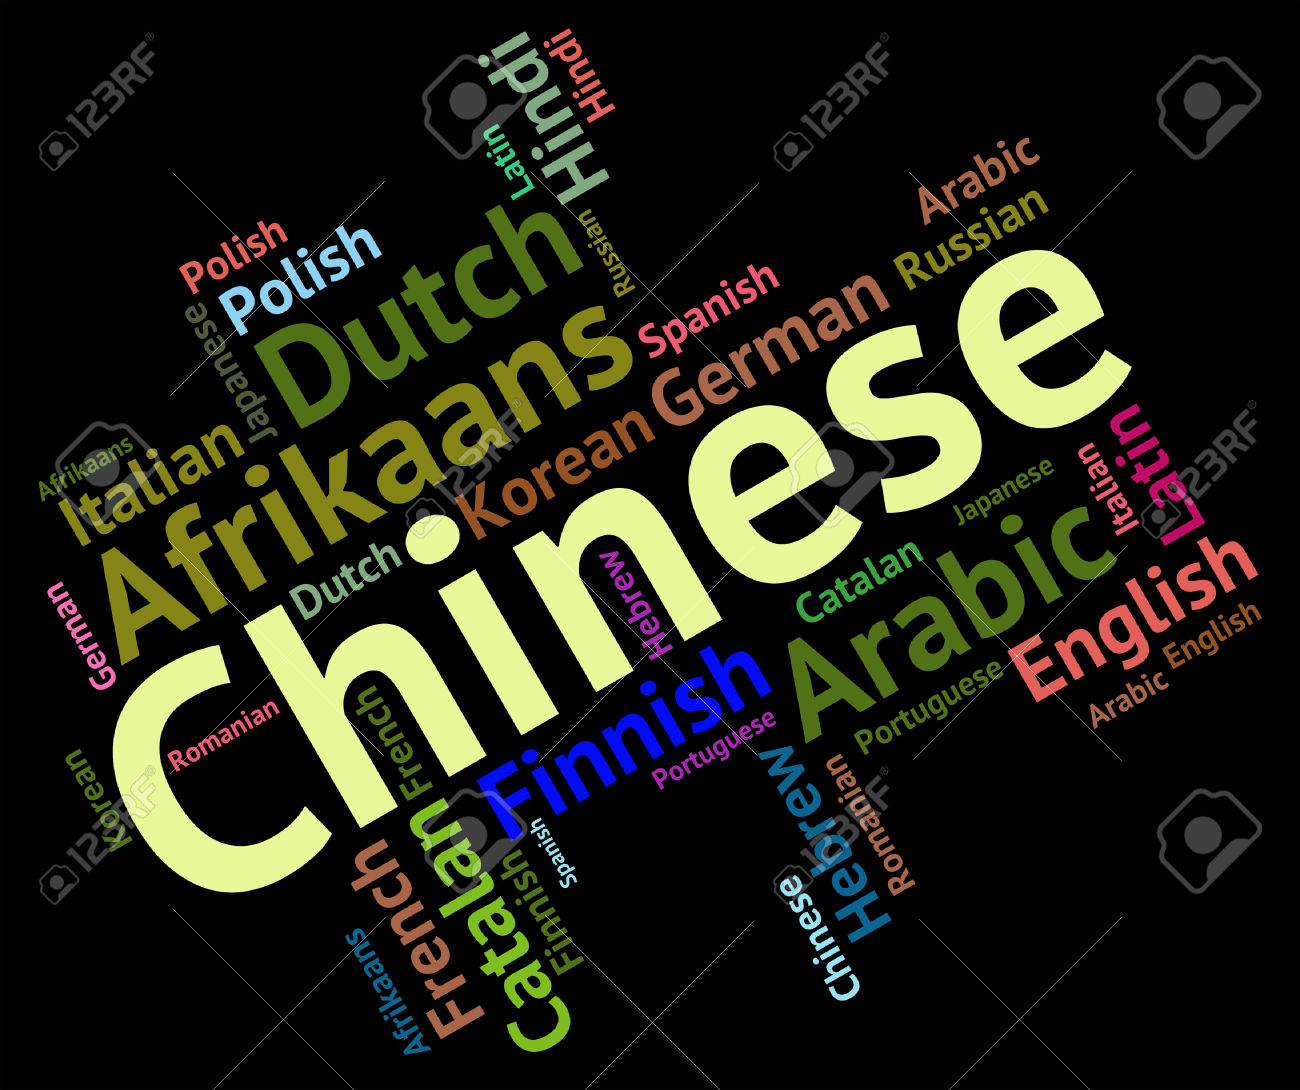 Chinaren  lezvi das@ntacner  Չինարեն լեզվի դասընացներ